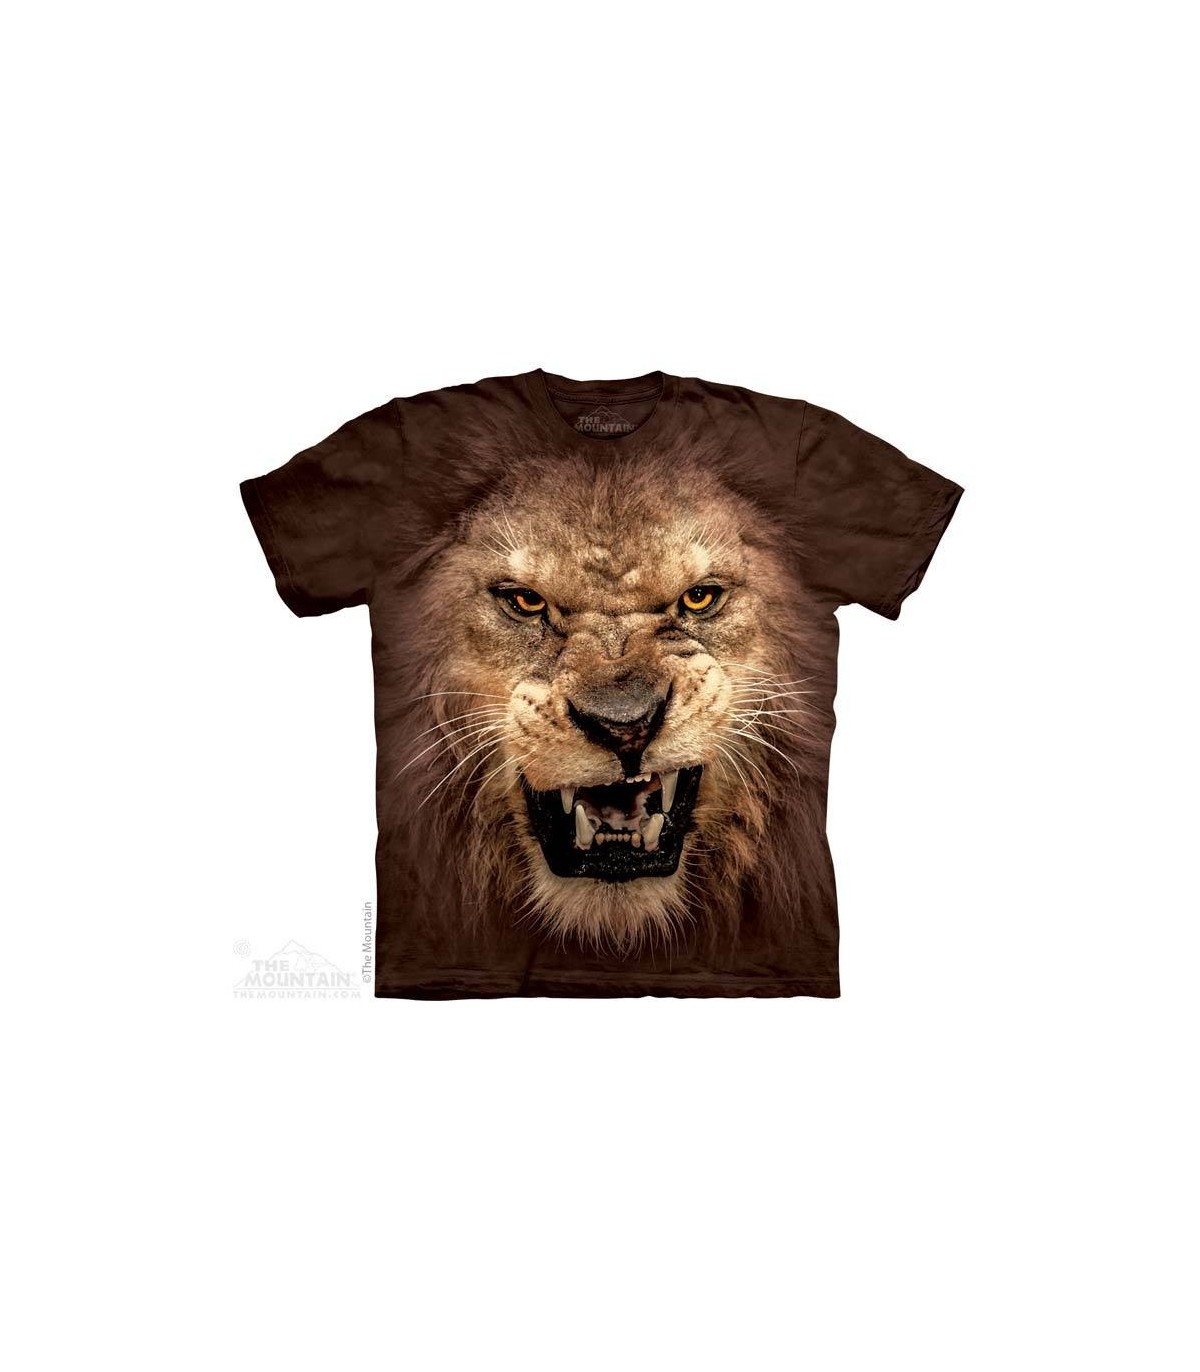 New The Mountain Big Face Roaring Lion T Shirt